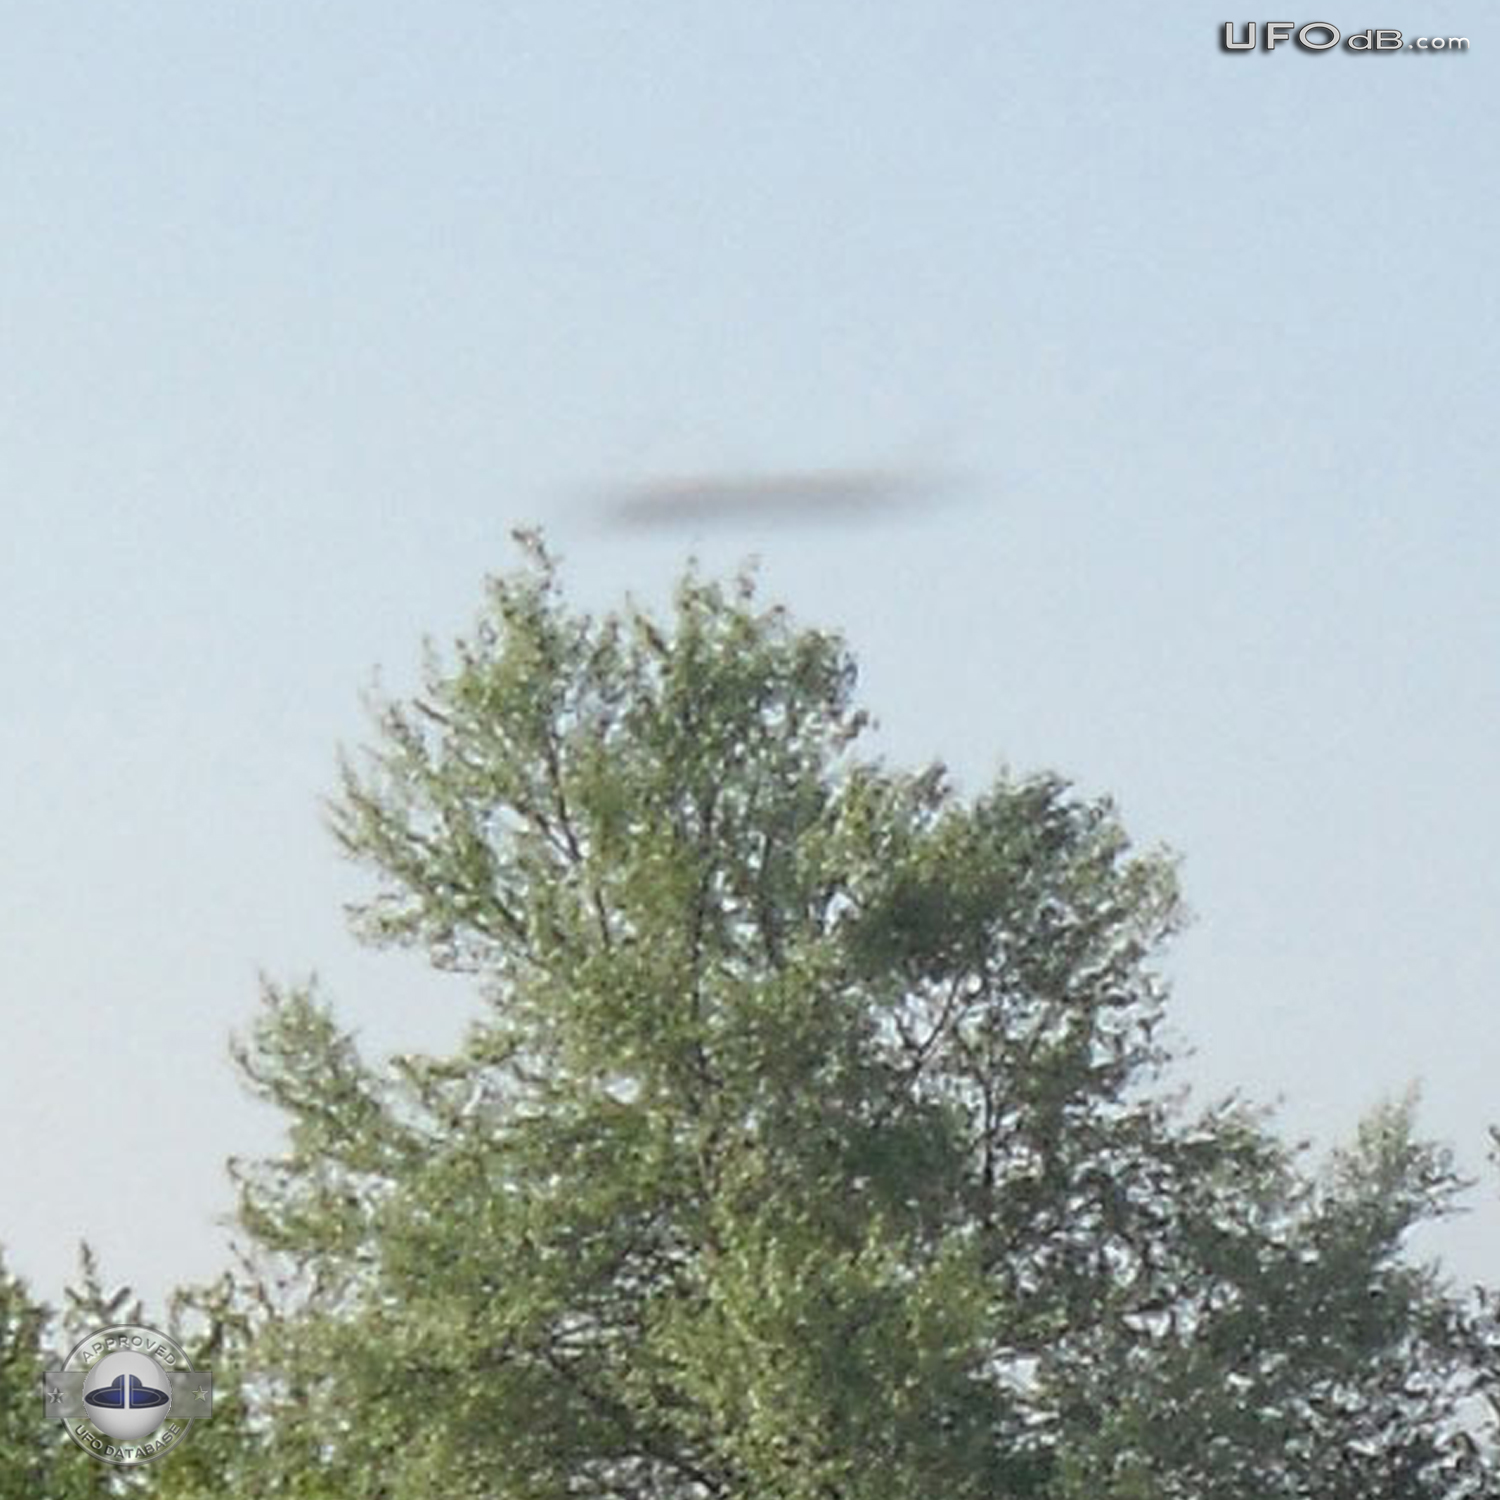 Bradley Ponds Fisherman UFO picture | Lincolnshire UK | April 23 2011 UFO Picture #301-3